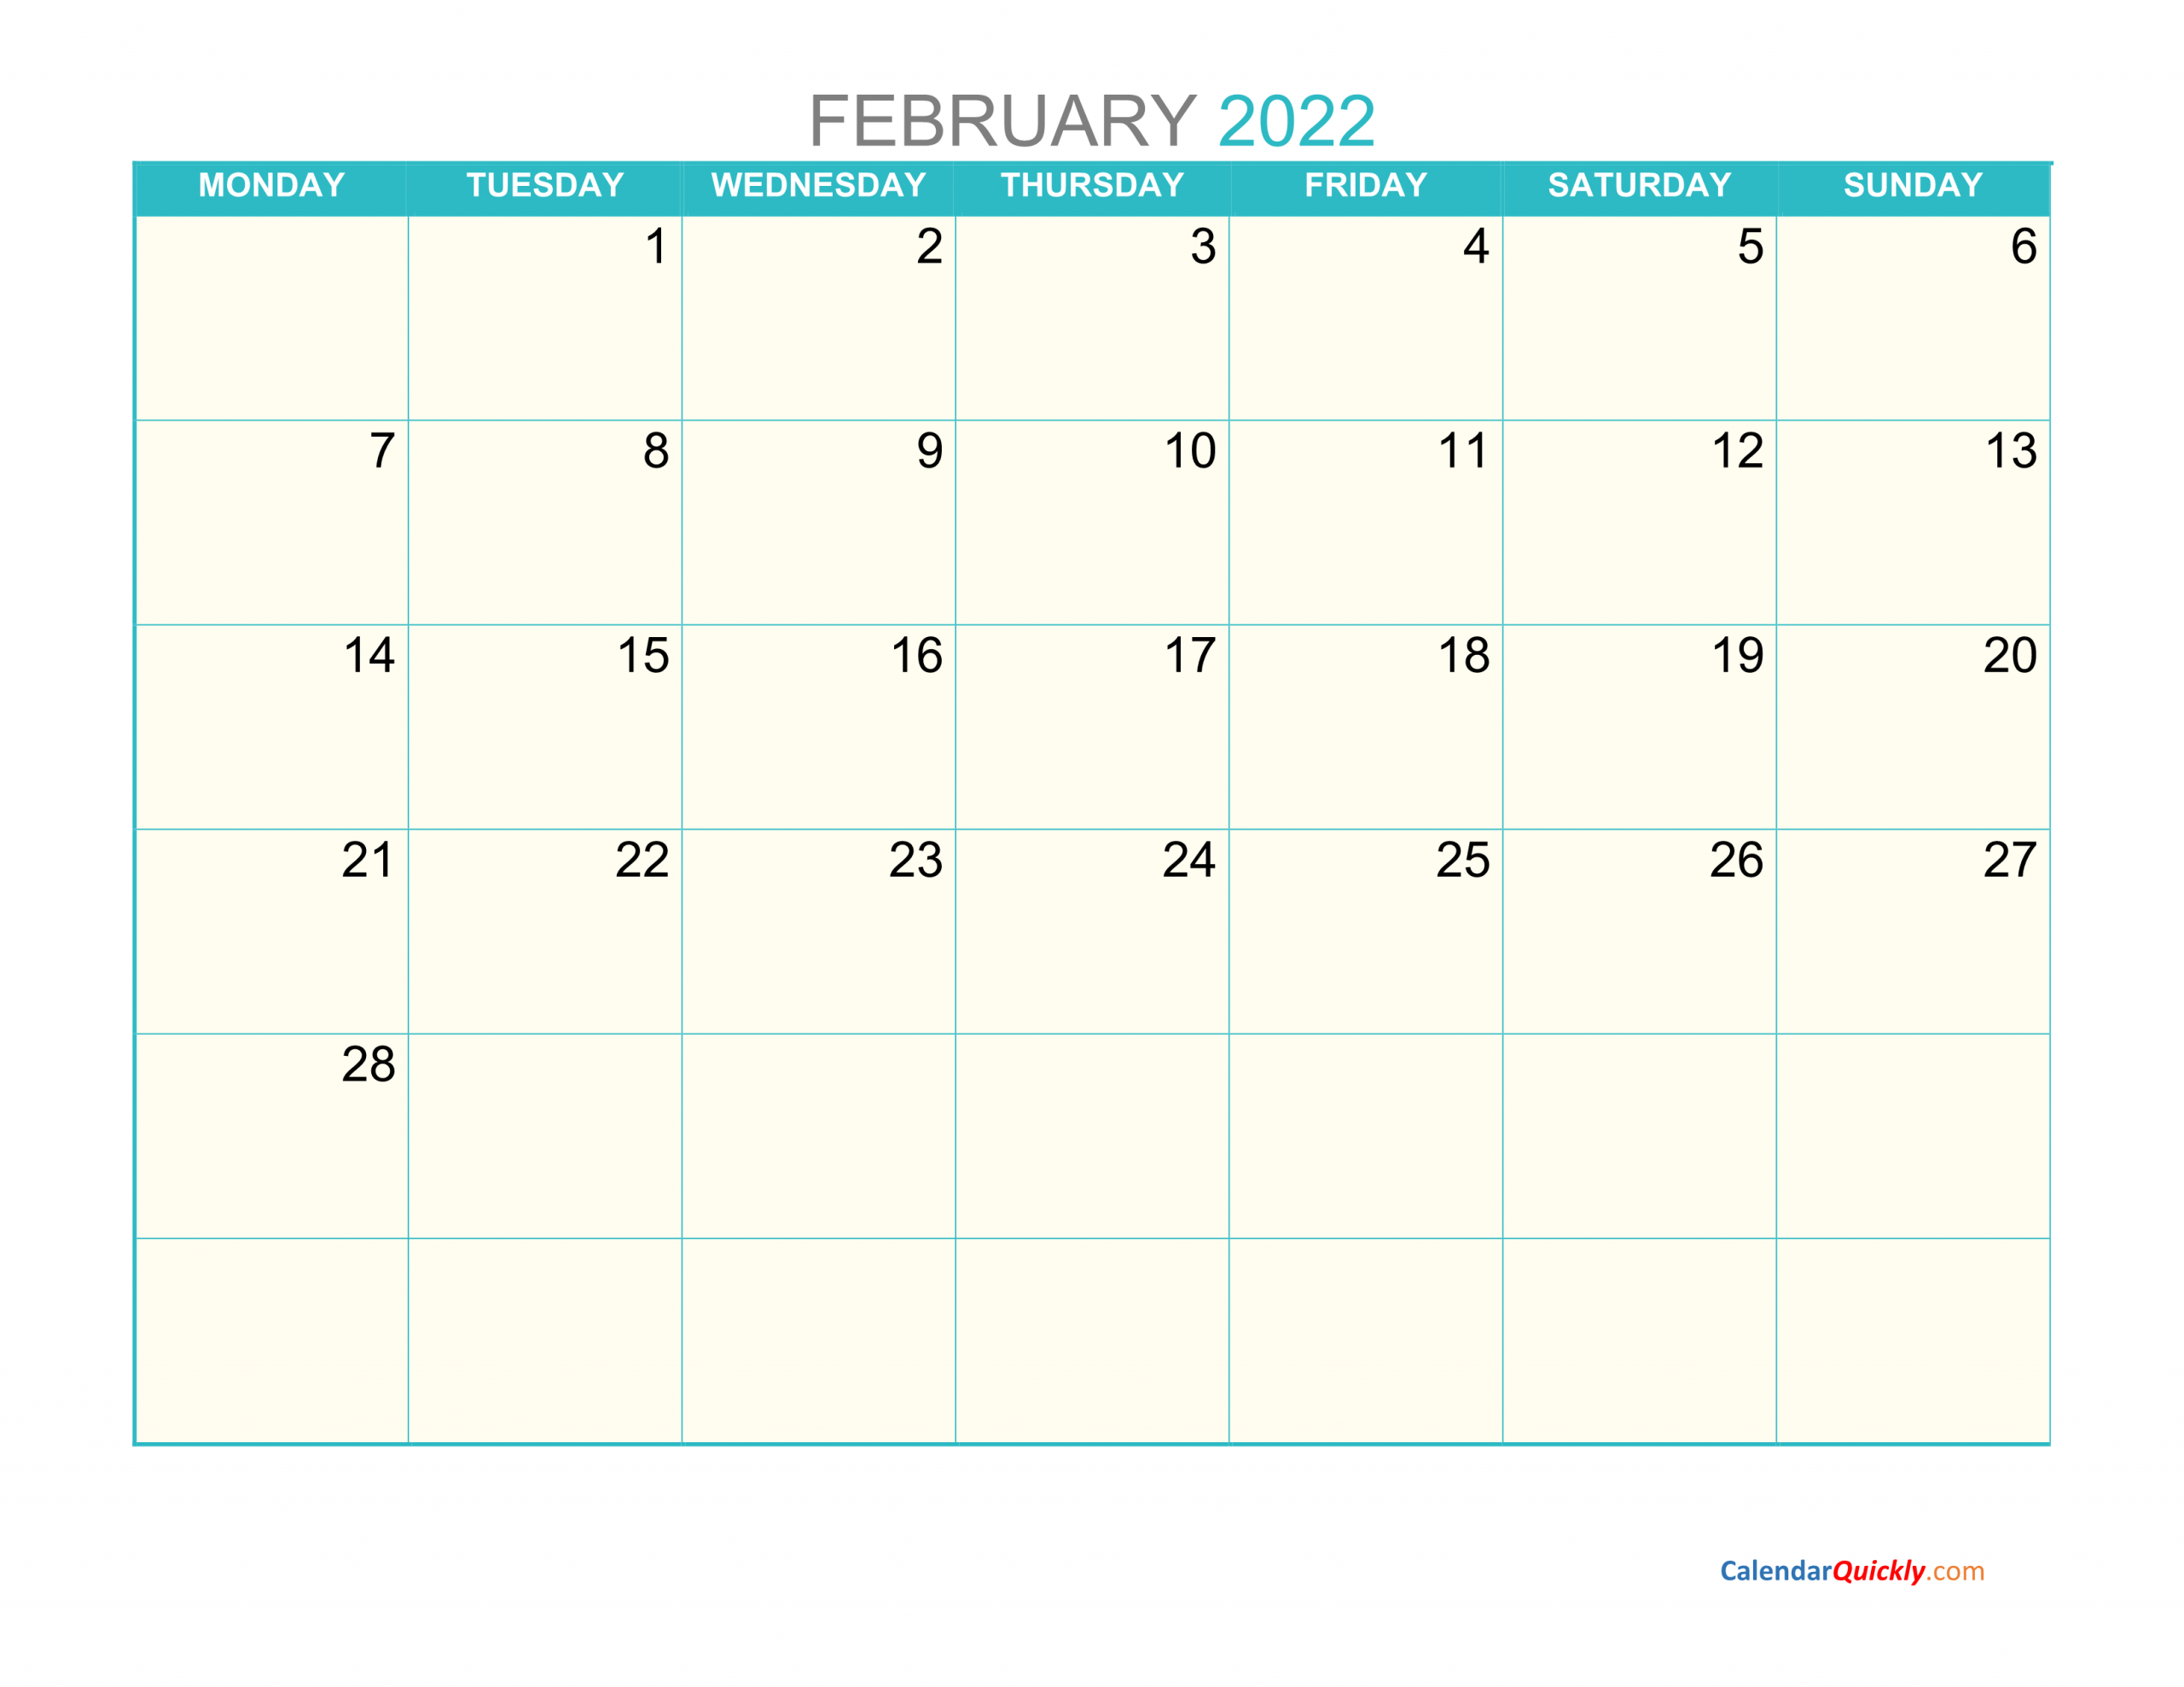 February Monday 2022 Calendar Printable Calendar Quickly 2